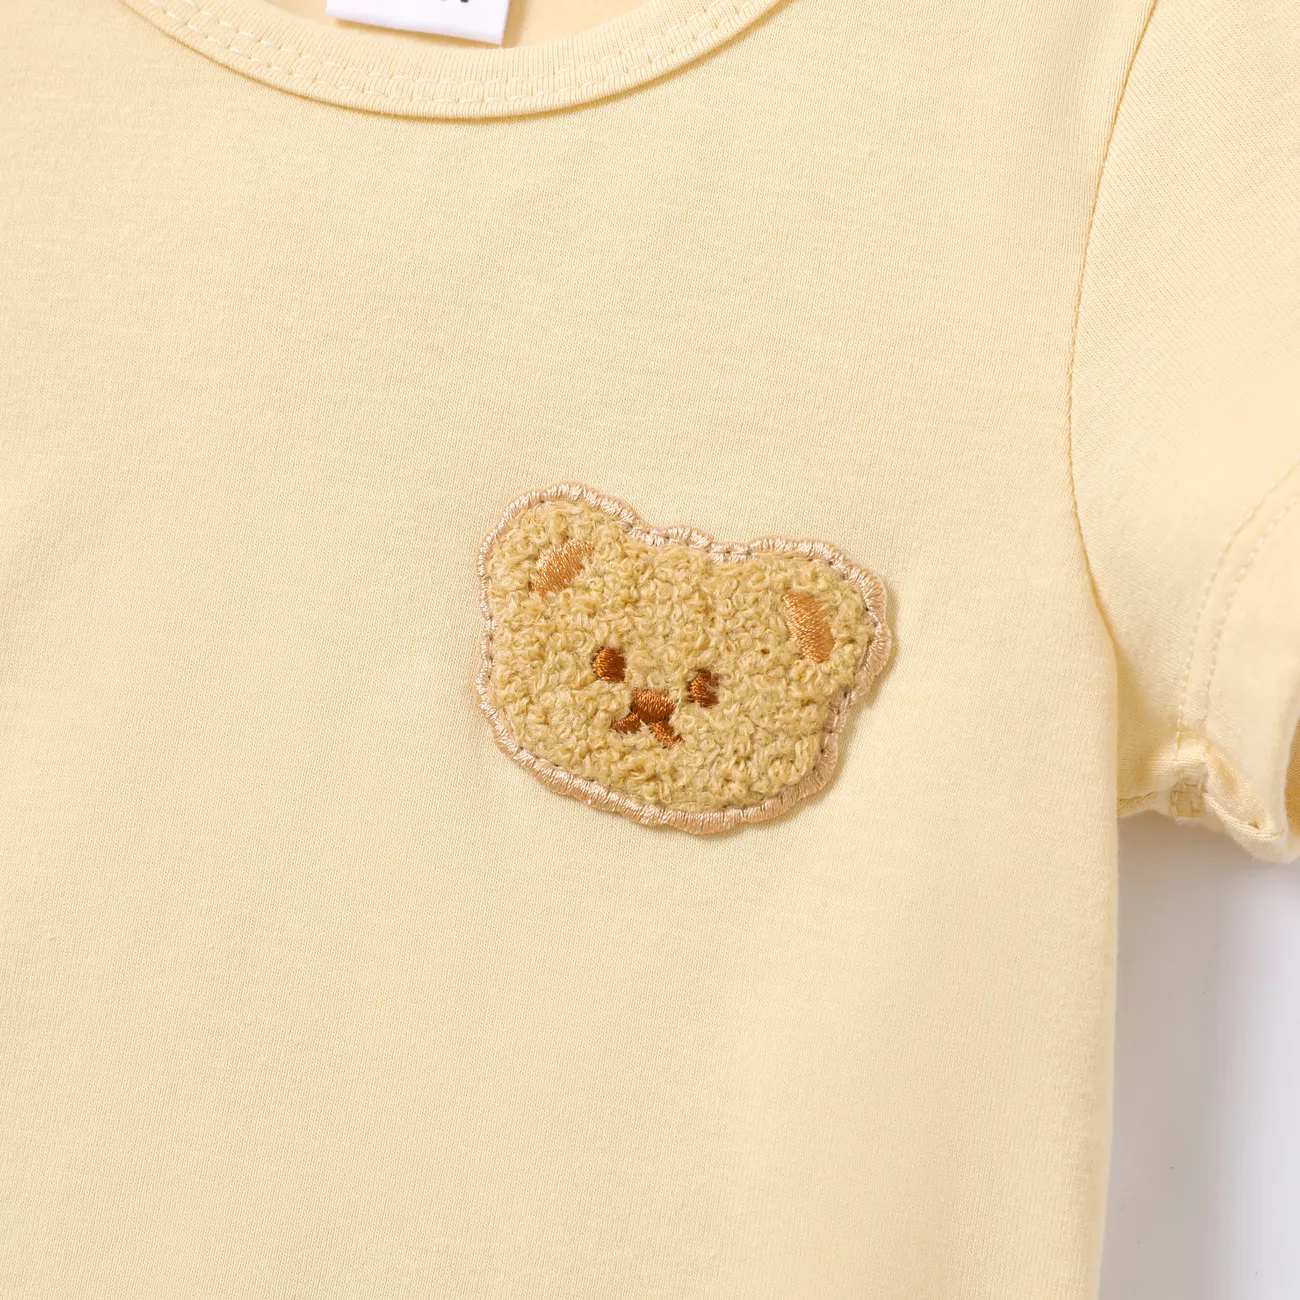 Baby Unisex Bär Lässig Kurzärmelig T-Shirts Aprikose big image 1